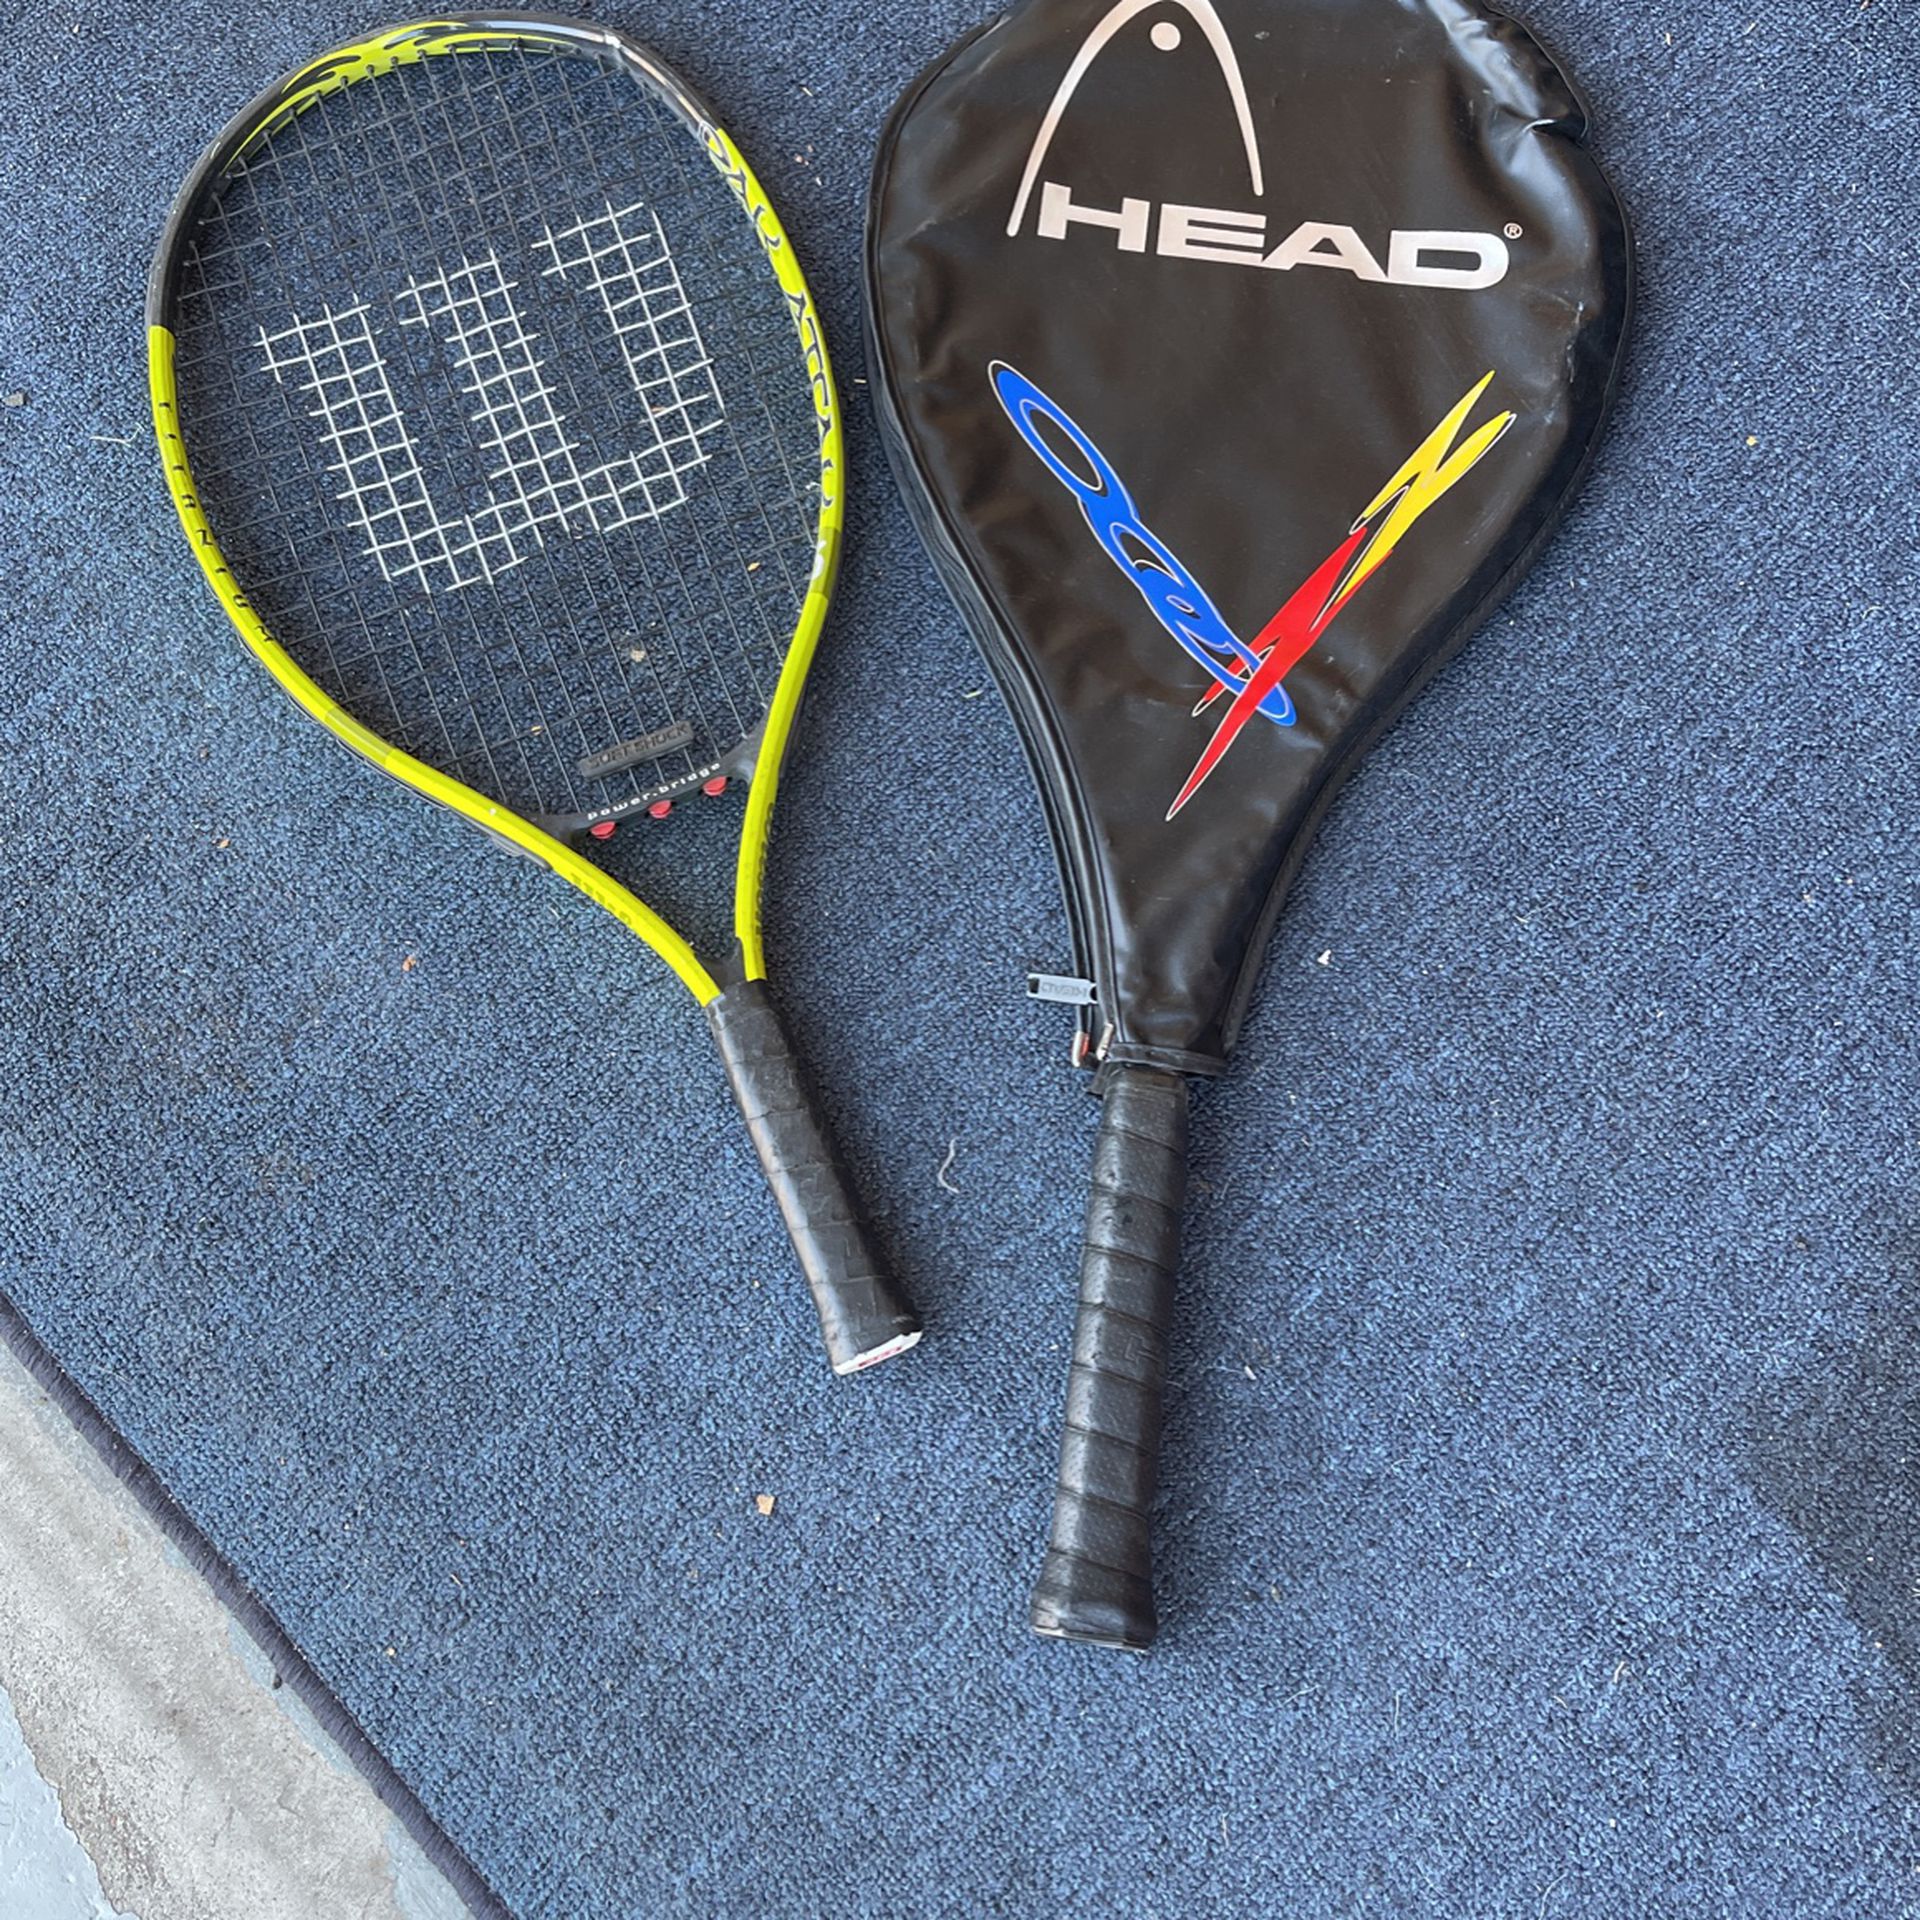 One Wilson Tennis Racket And One Head Tennis Racket